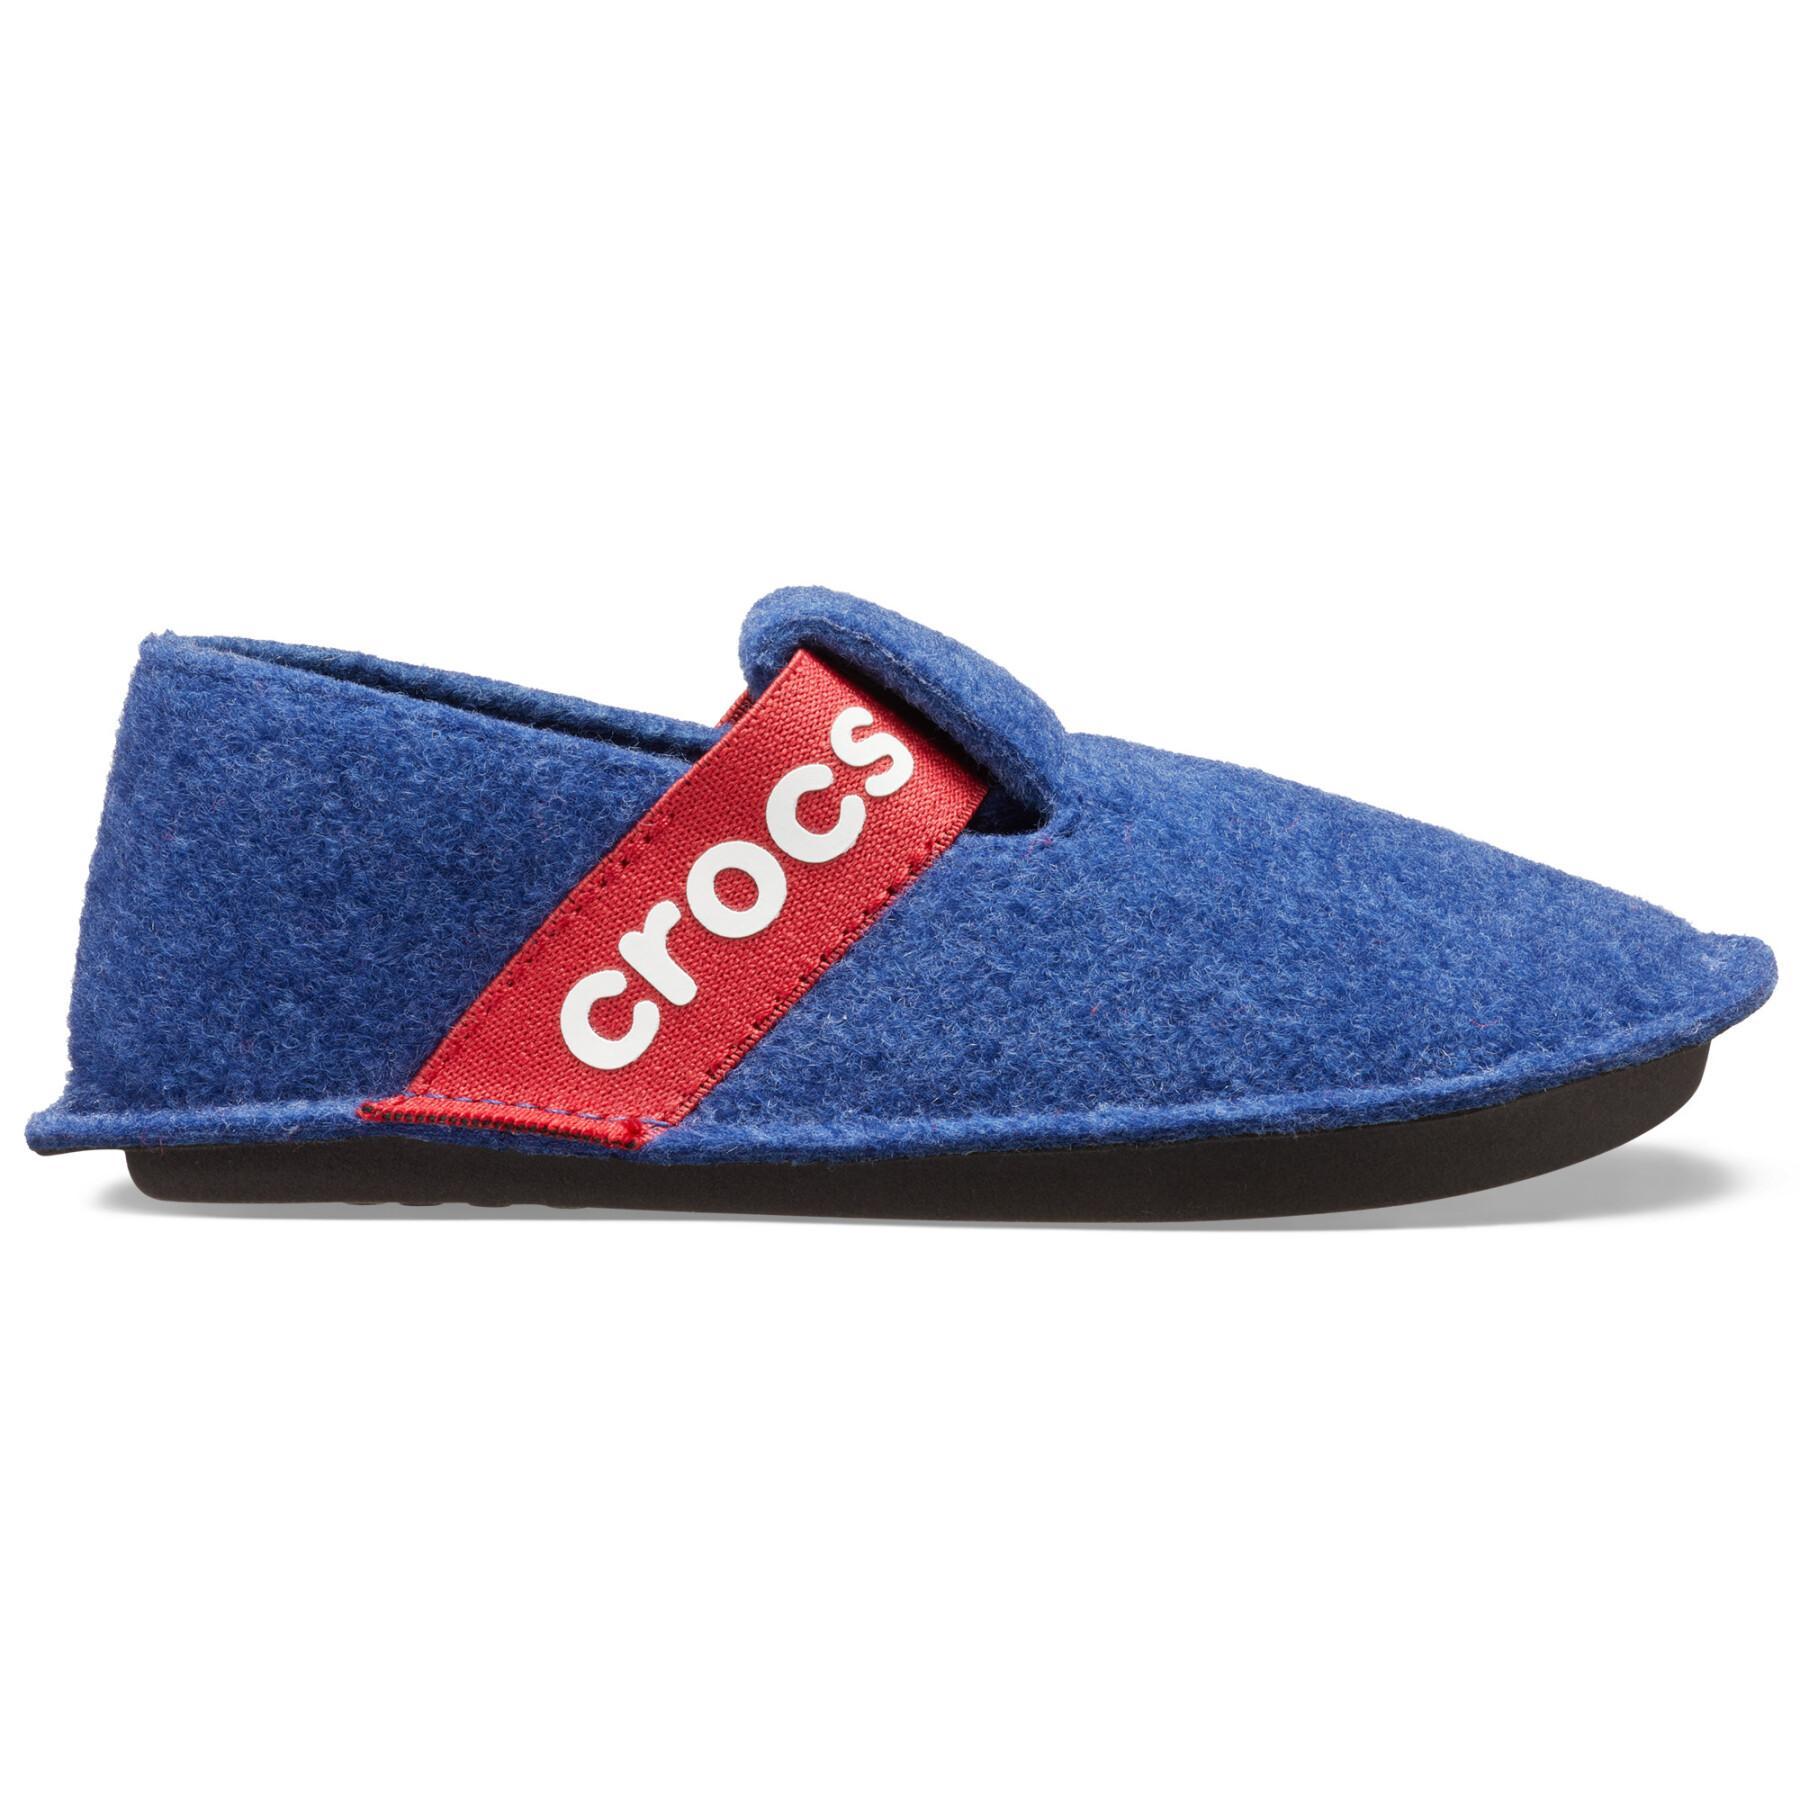 Kindersloffen Crocs classic slipper